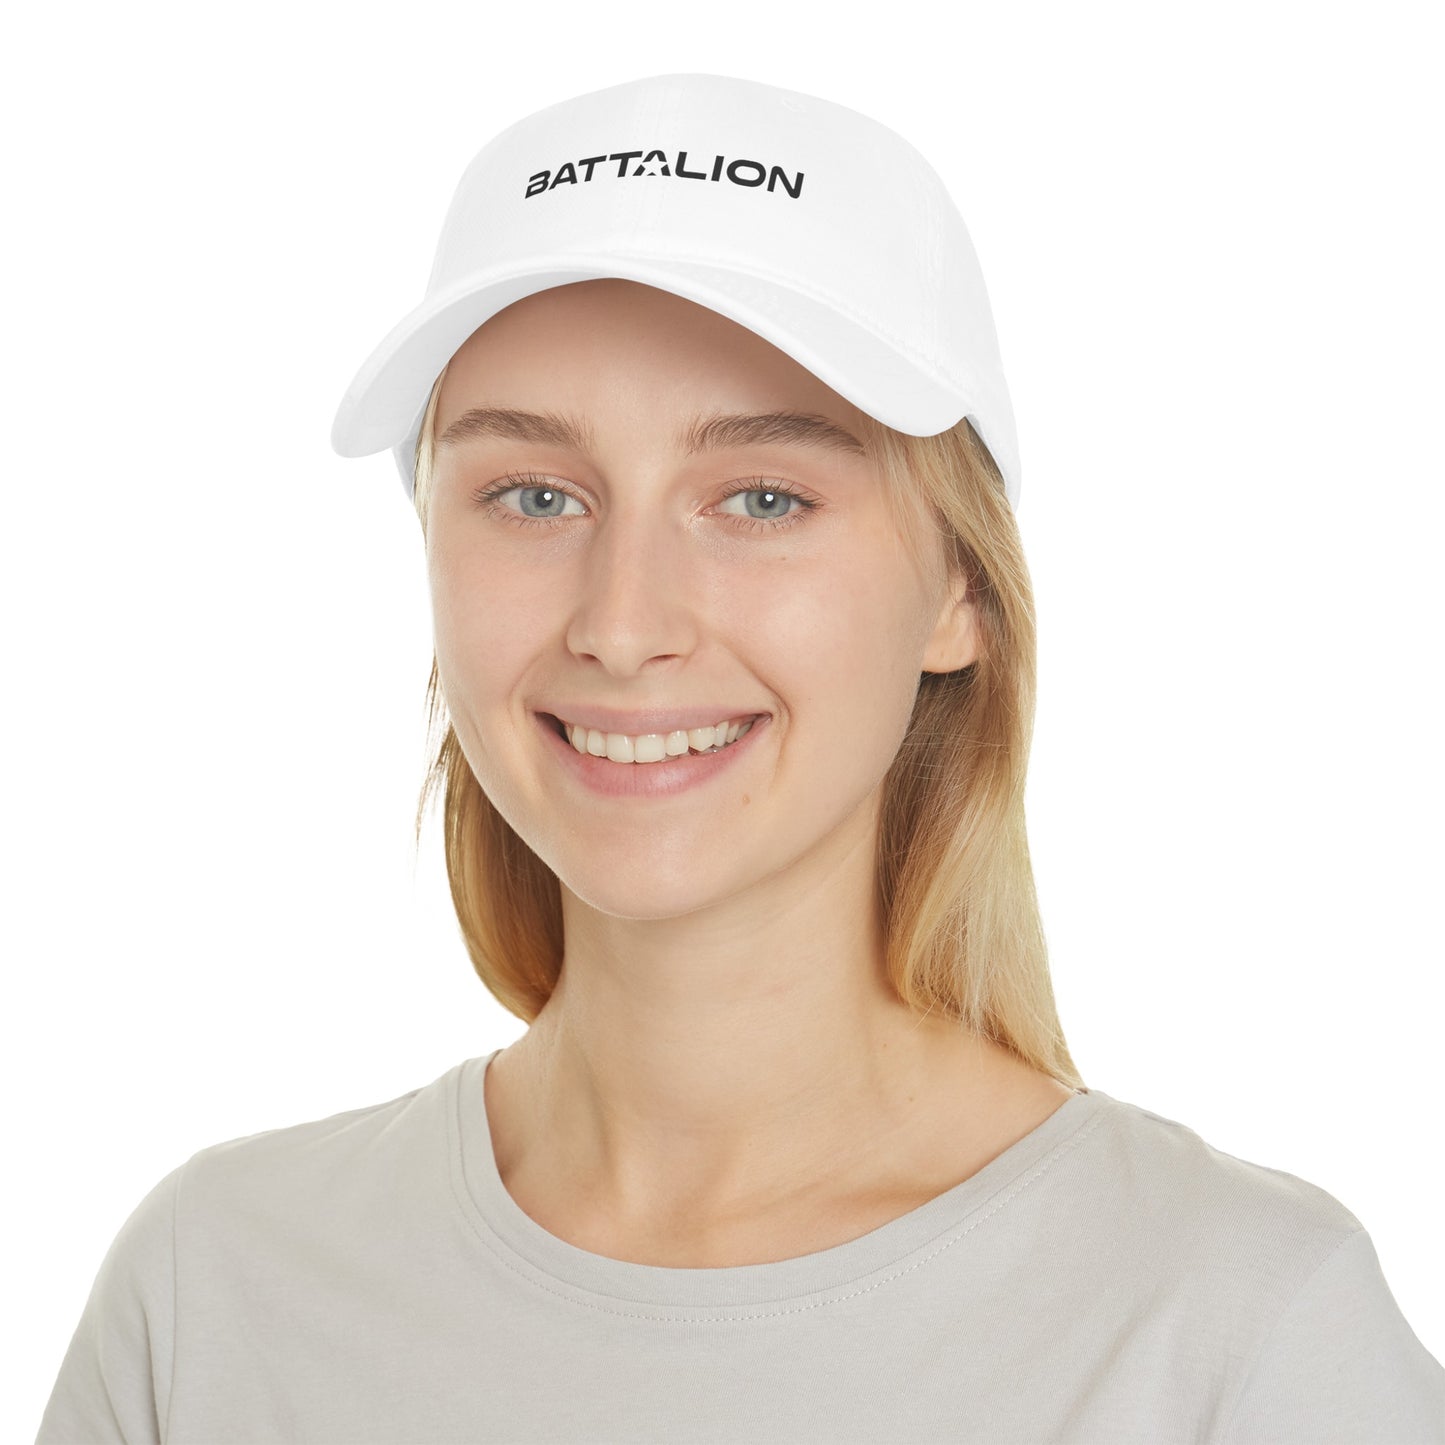 BATTALION - Dad Hat